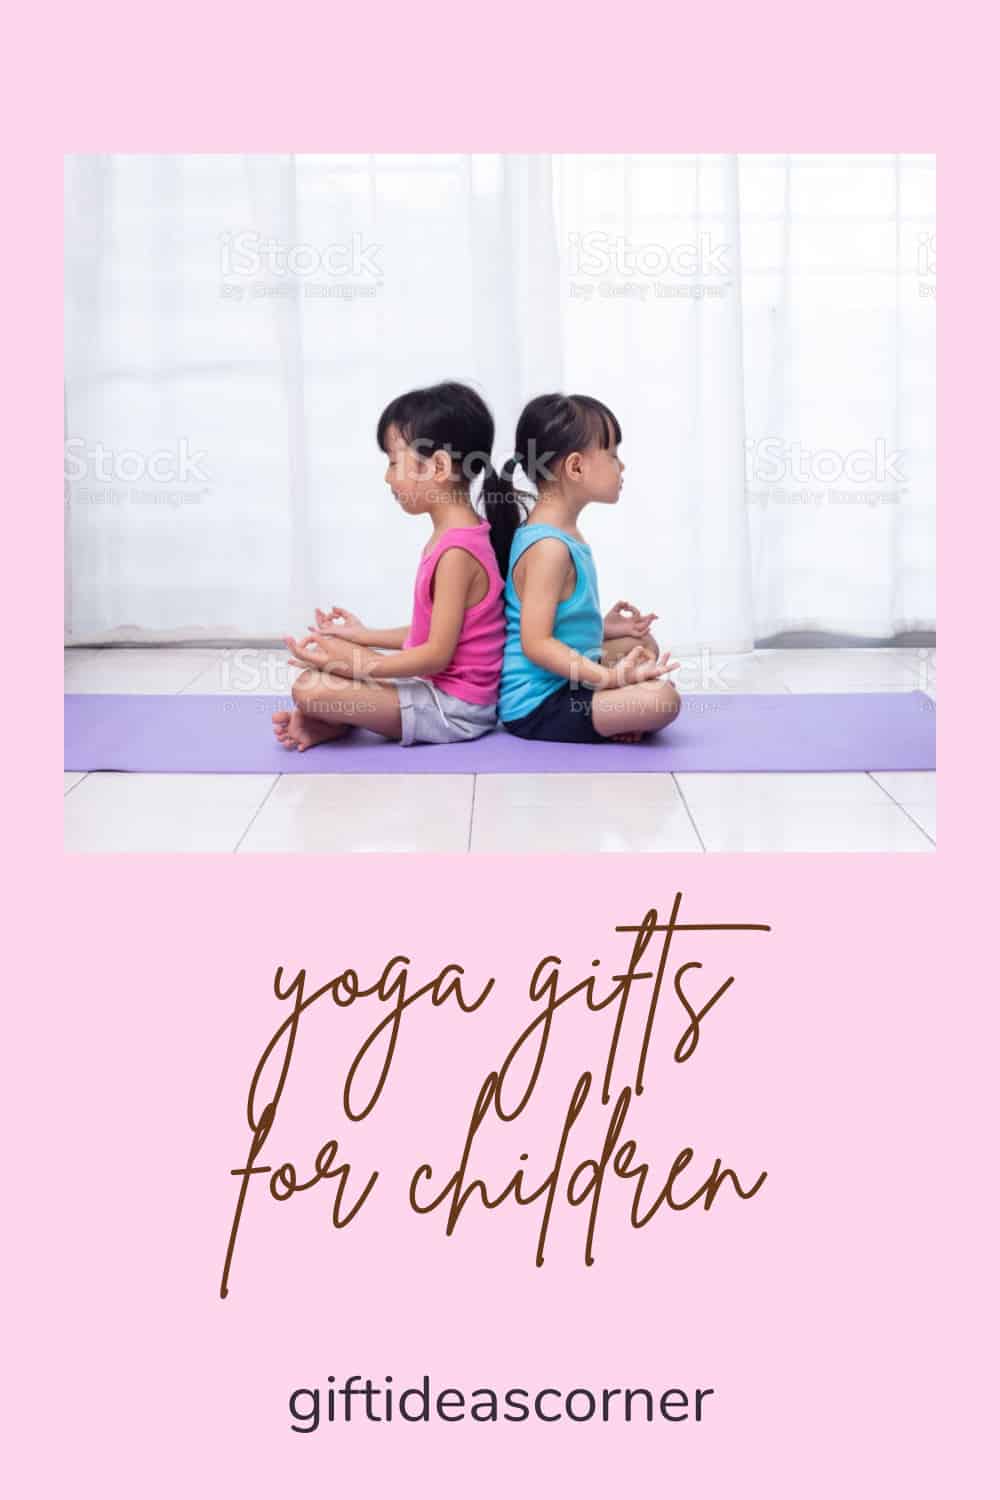 yoga gifts 4